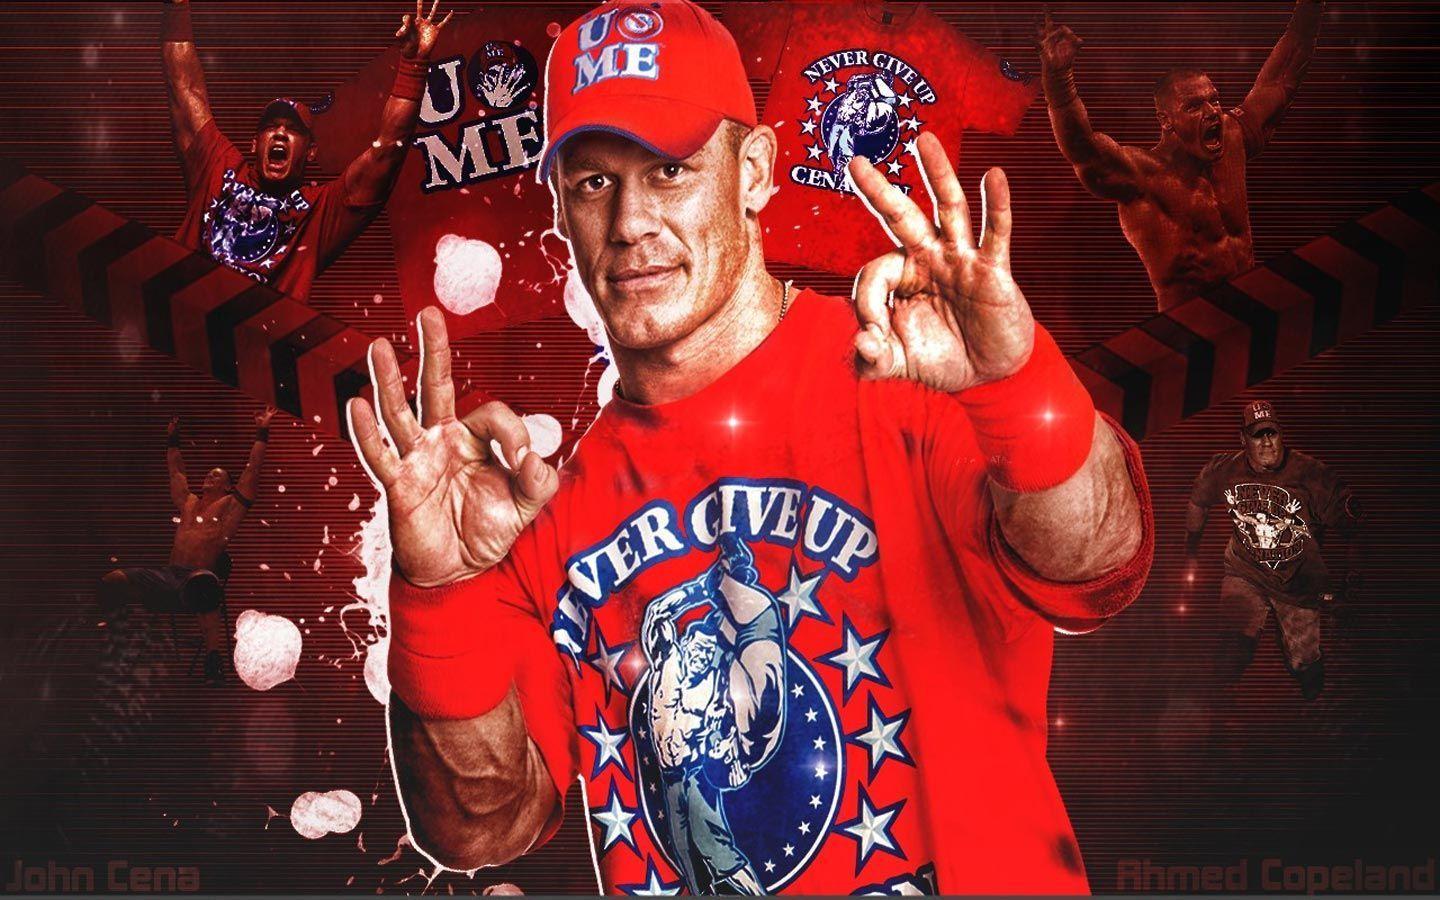 John Cena HD Wallpaper. TanukinoSippo